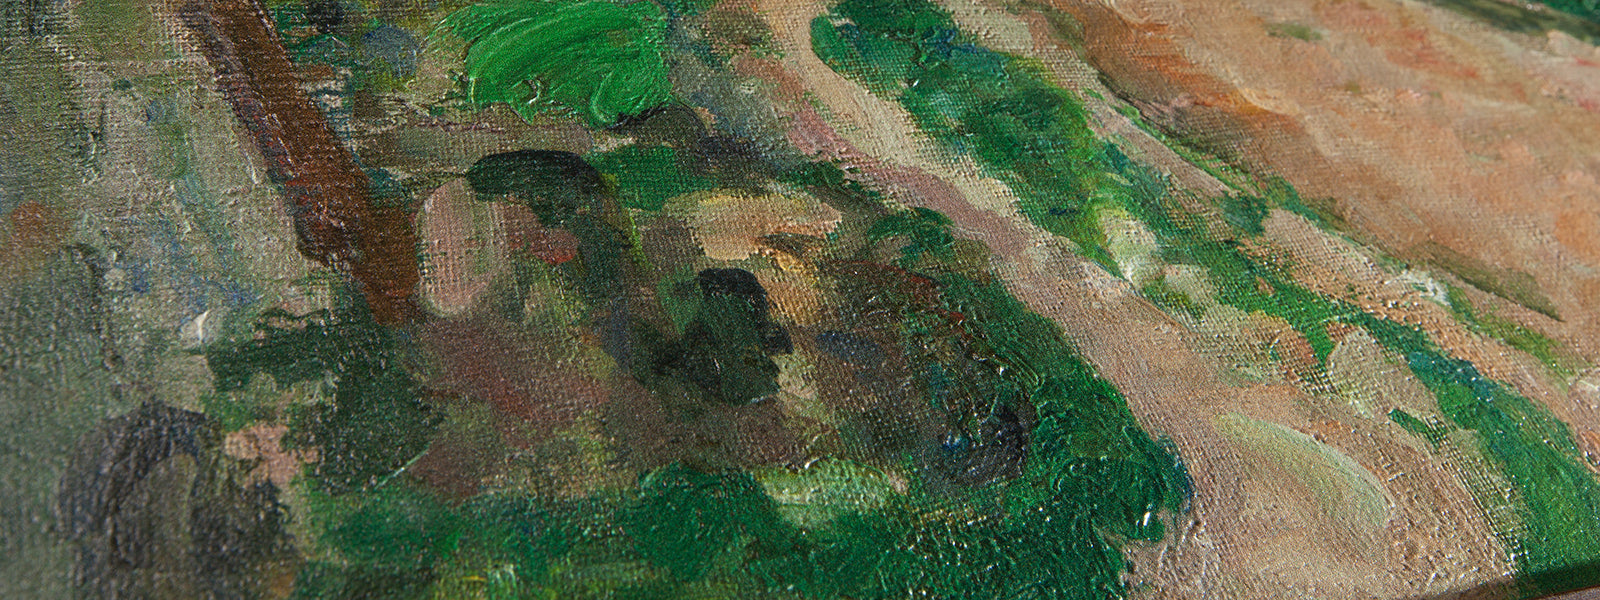 Road at Auvers-sur-Oise, by Cézanne Painting Close Up